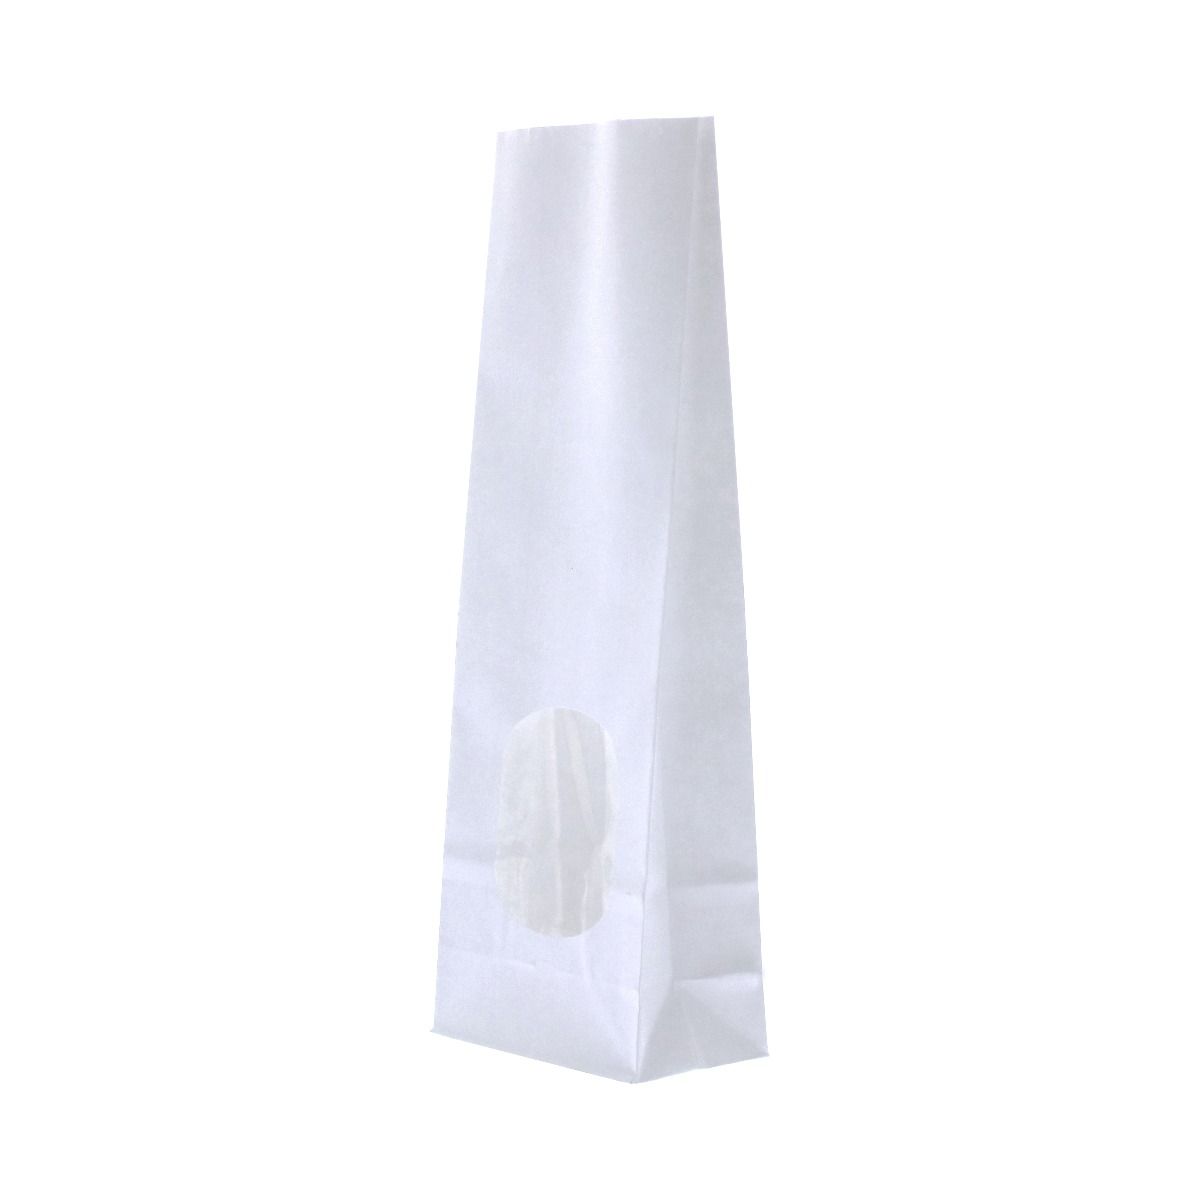 Block bottom bag kraft paper with window - white